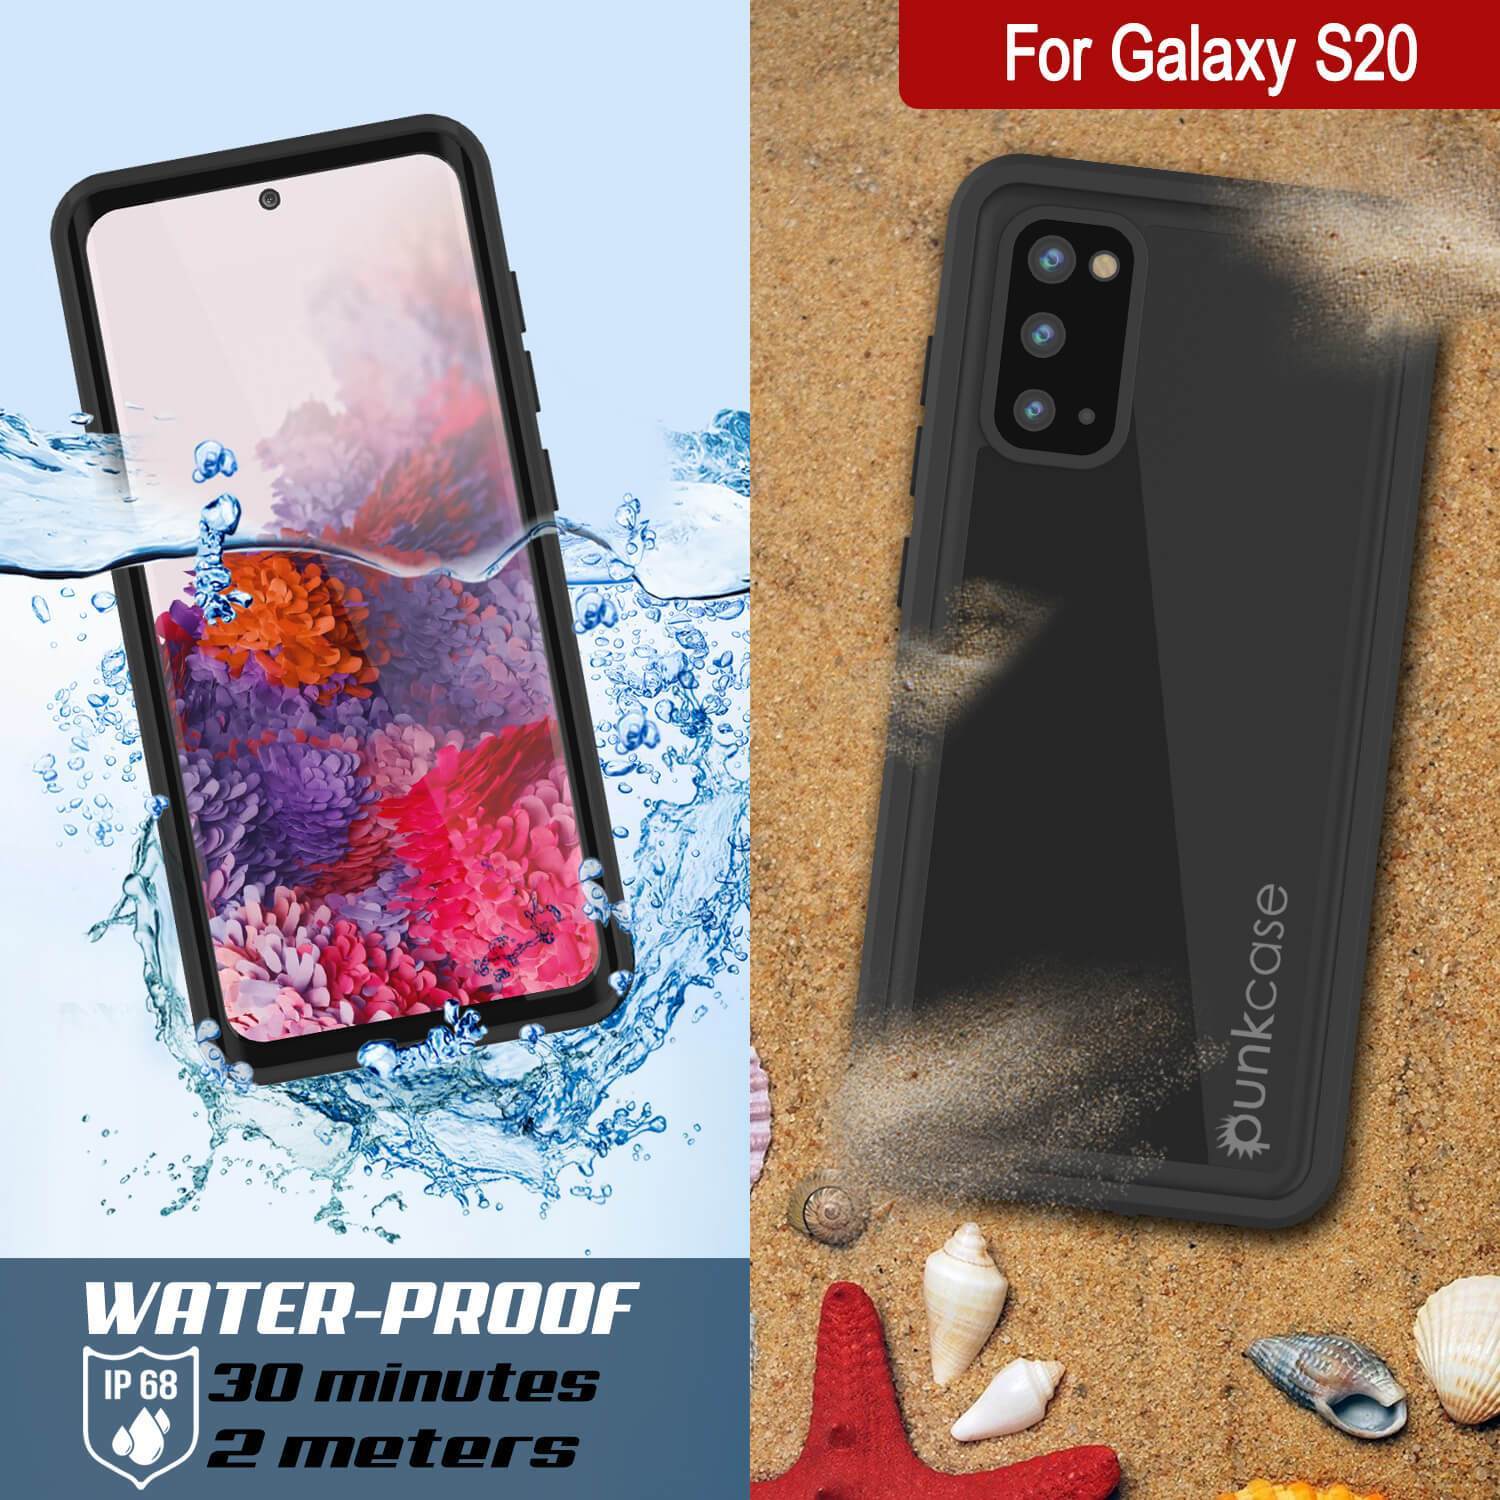 Galaxy S20 Waterproof Case PunkCase StudStar Light Green Thin 6.6ft Underwater IP68 ShockProof